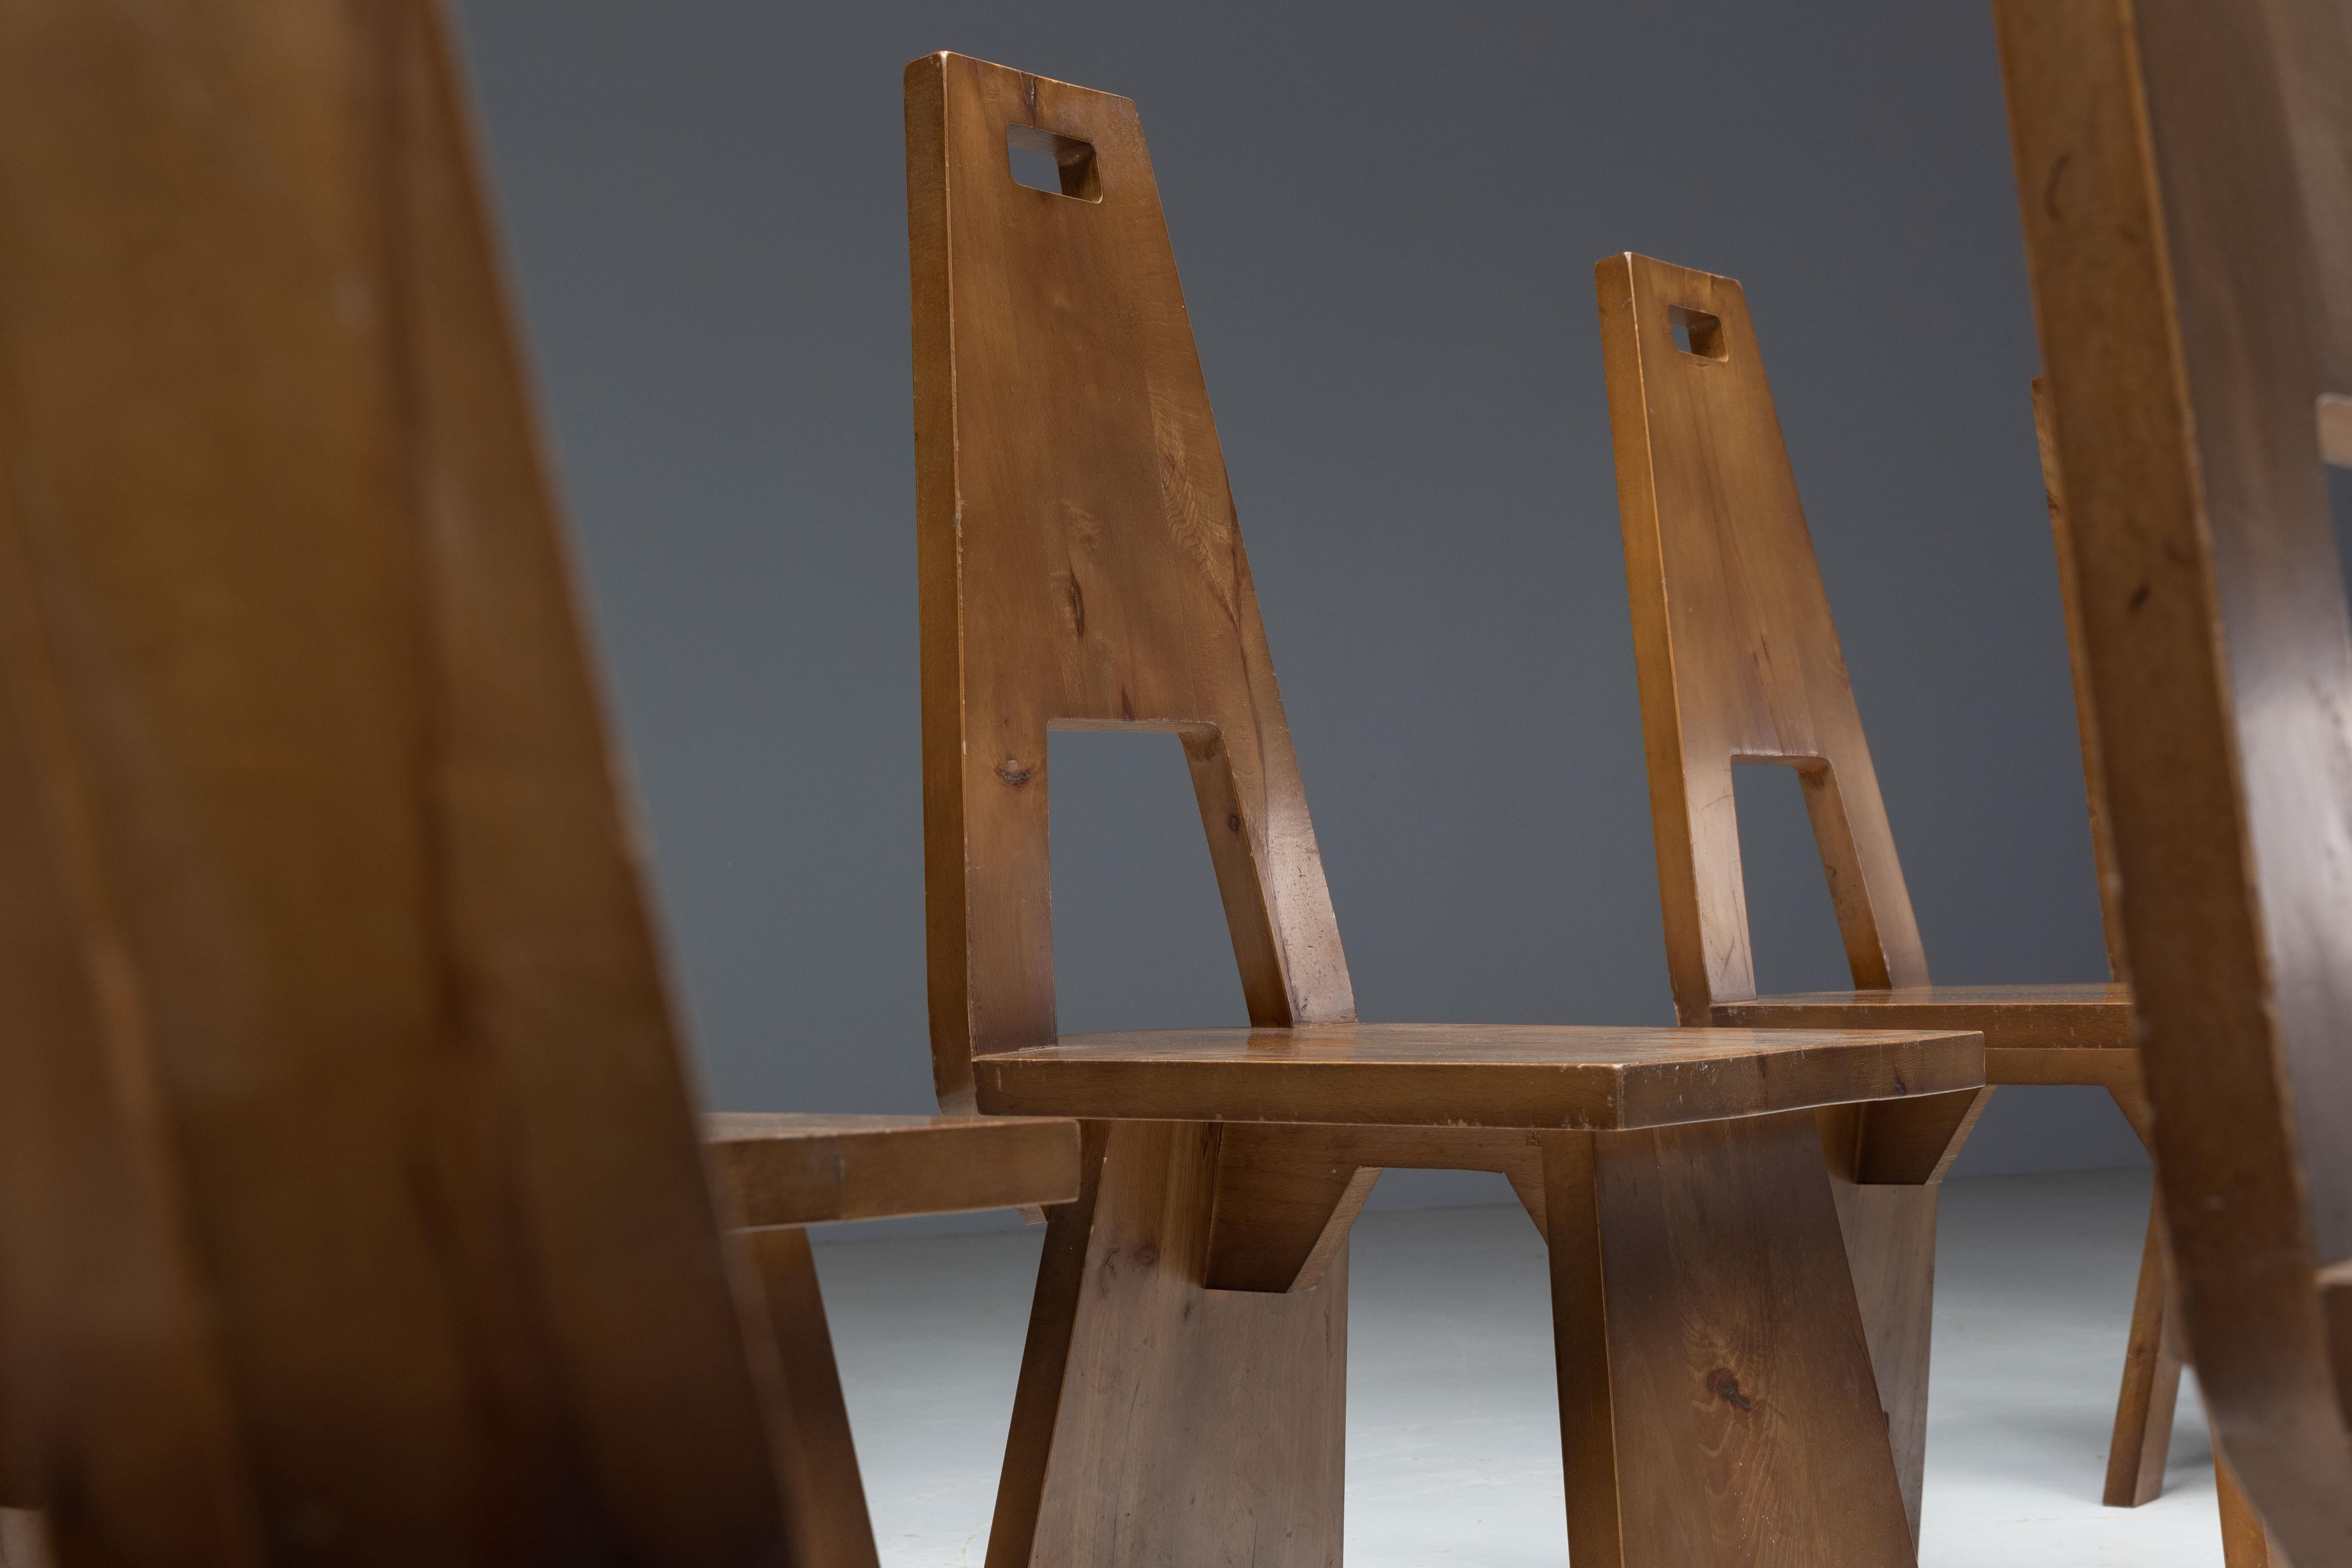 Sculptural Brutalist Wabi Sabi Chairs, Netherlands, 1960s For Sale 1